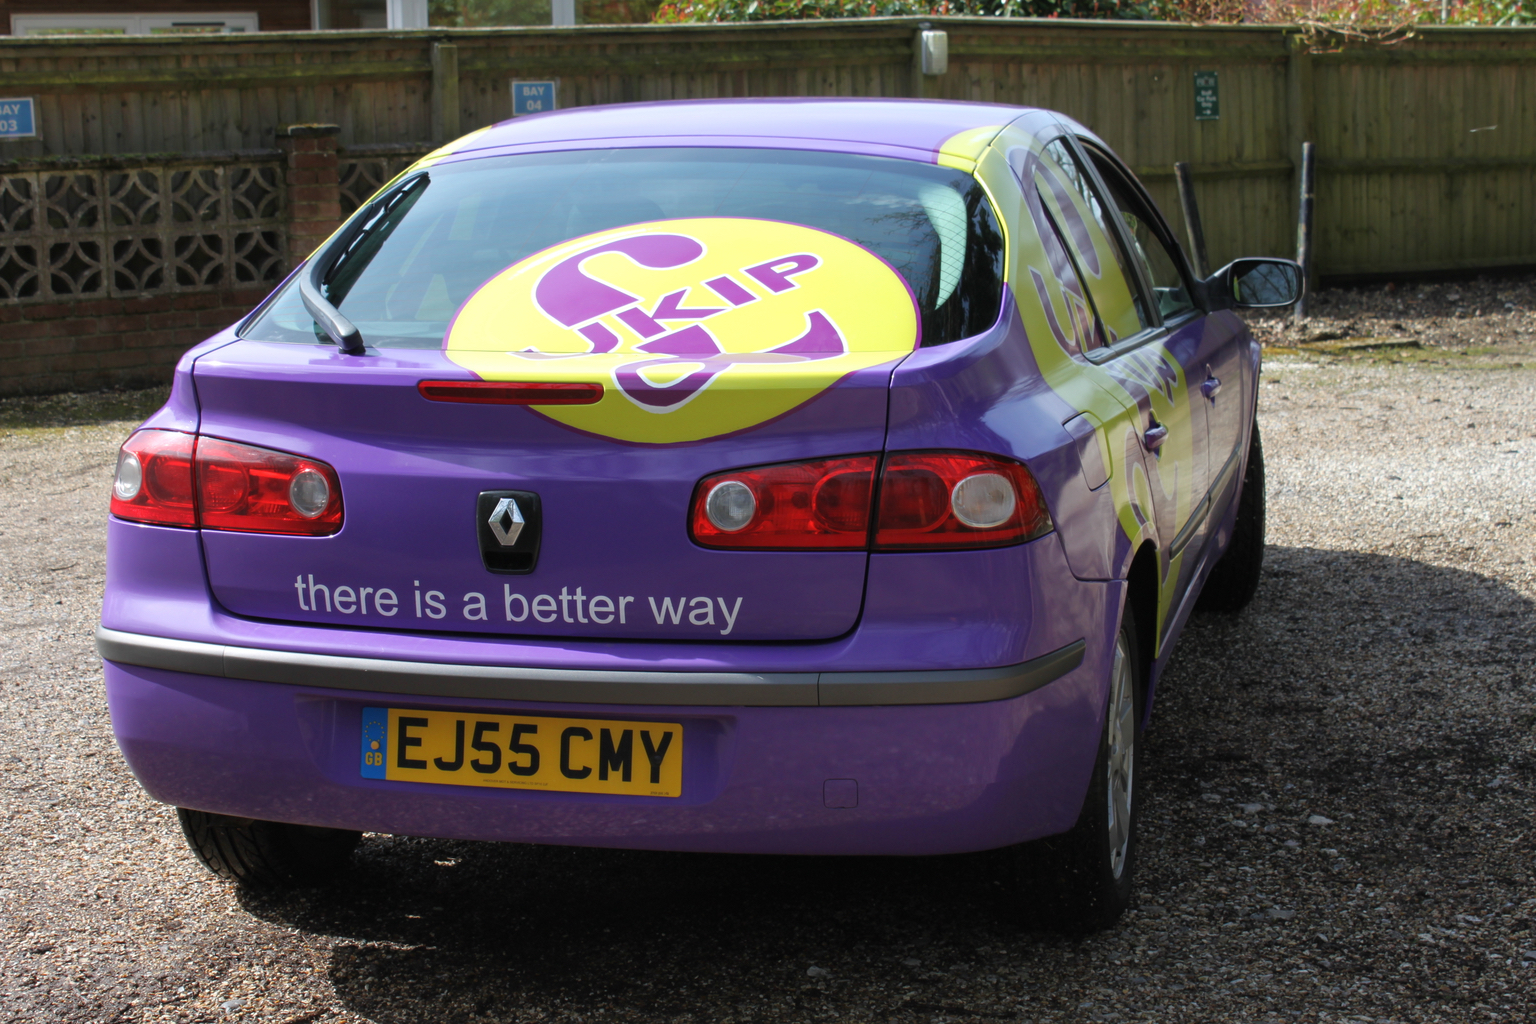 UKIP branded car